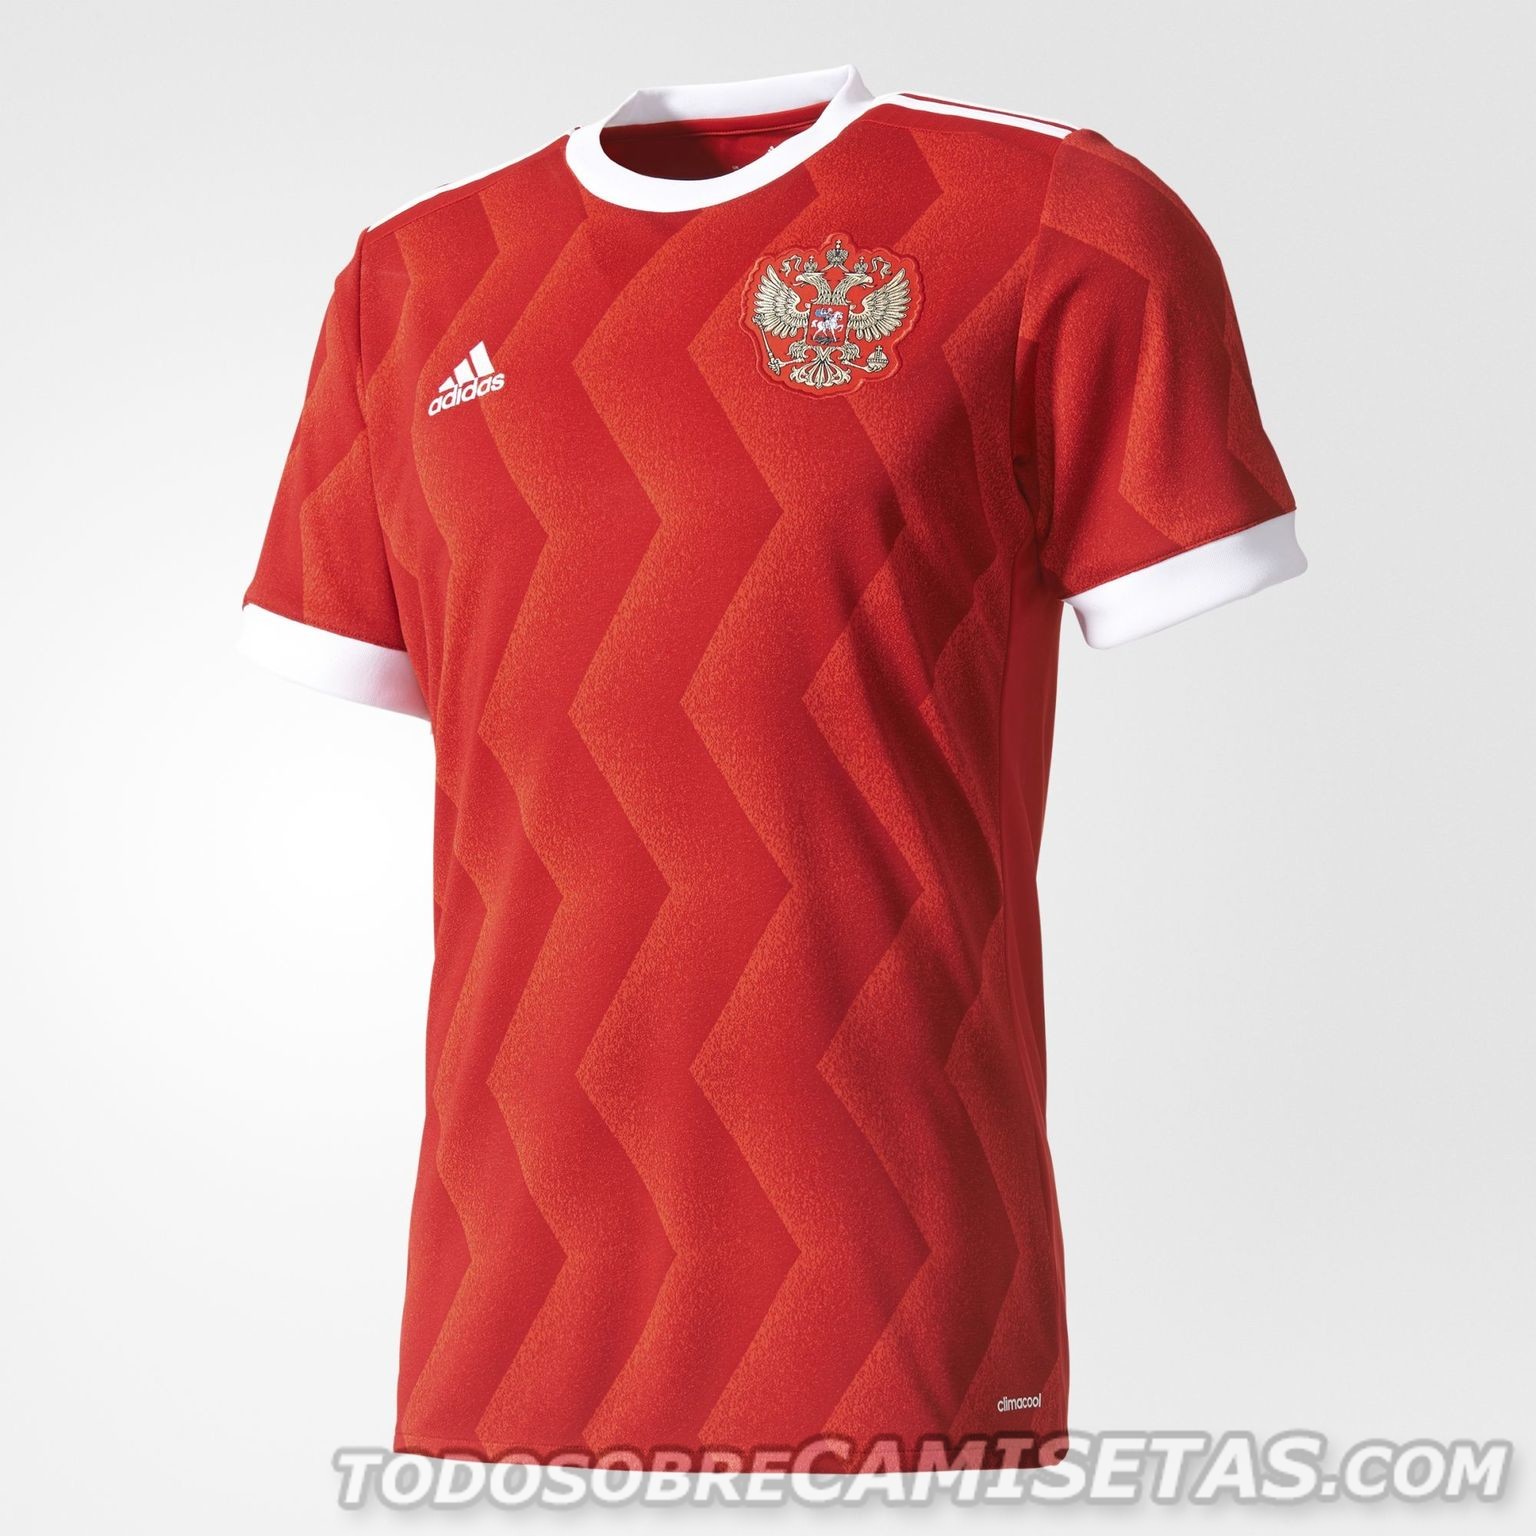 Russia 2017-18 adidas home kit